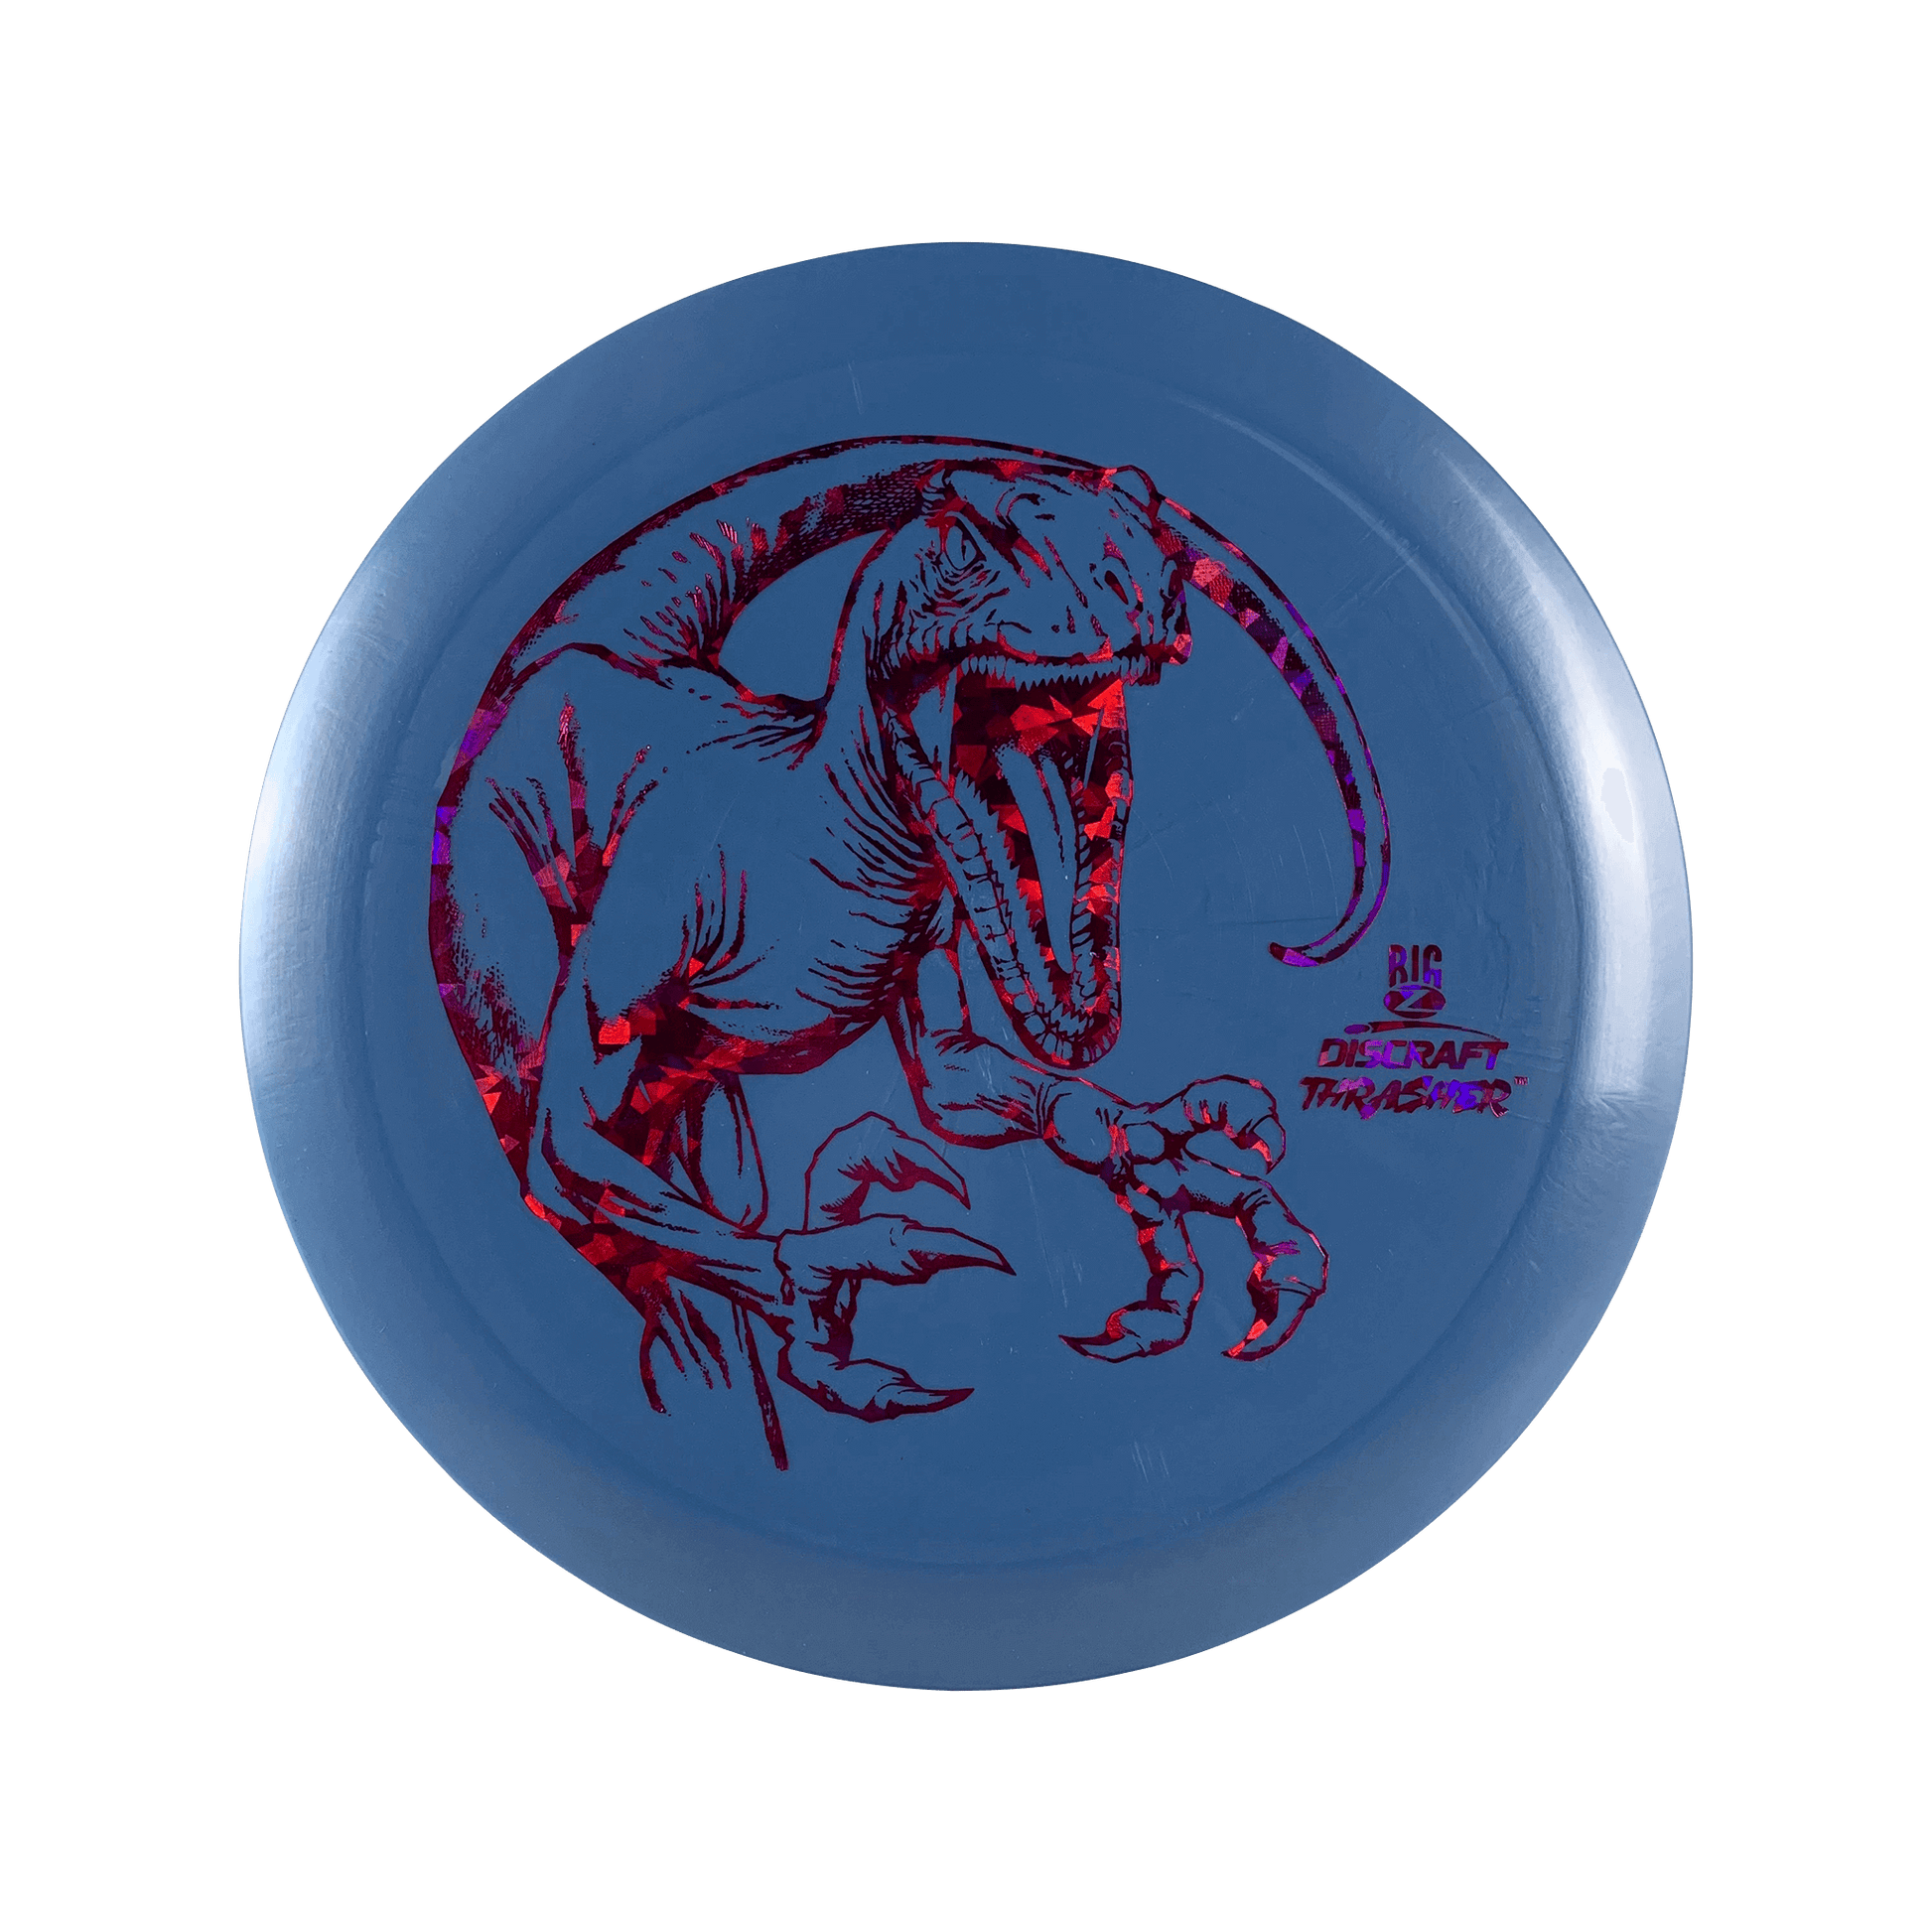 Big Z Thrasher Disc Discraft blue 173 